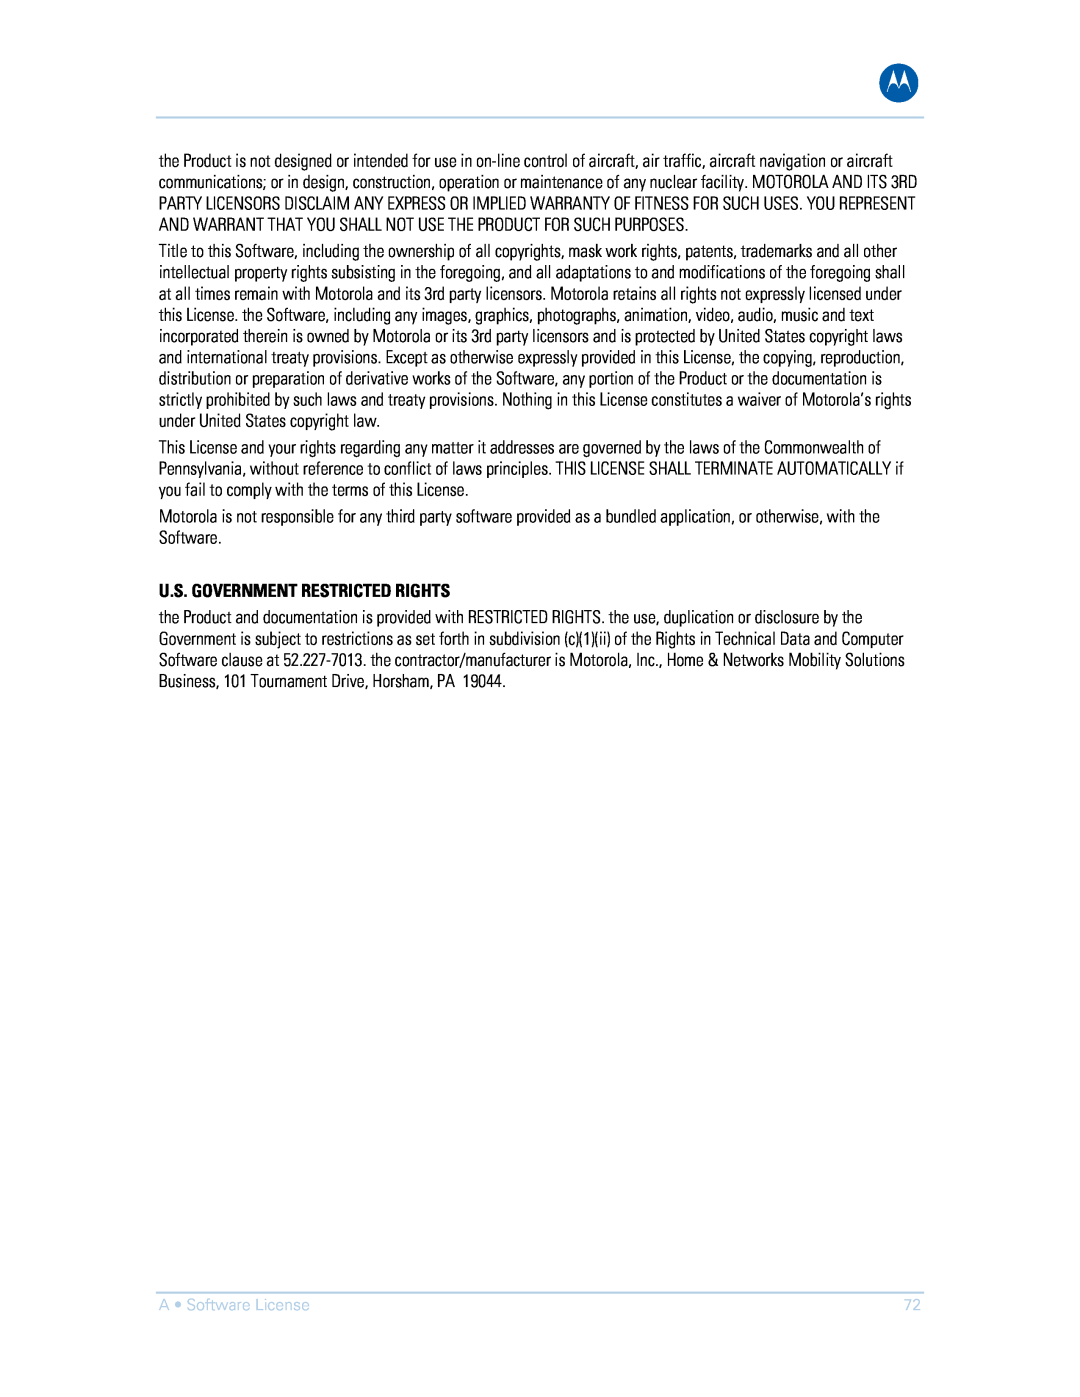 Motorola SVG1501UE, SVG1501E manual U.S. Government Restricted Rights 